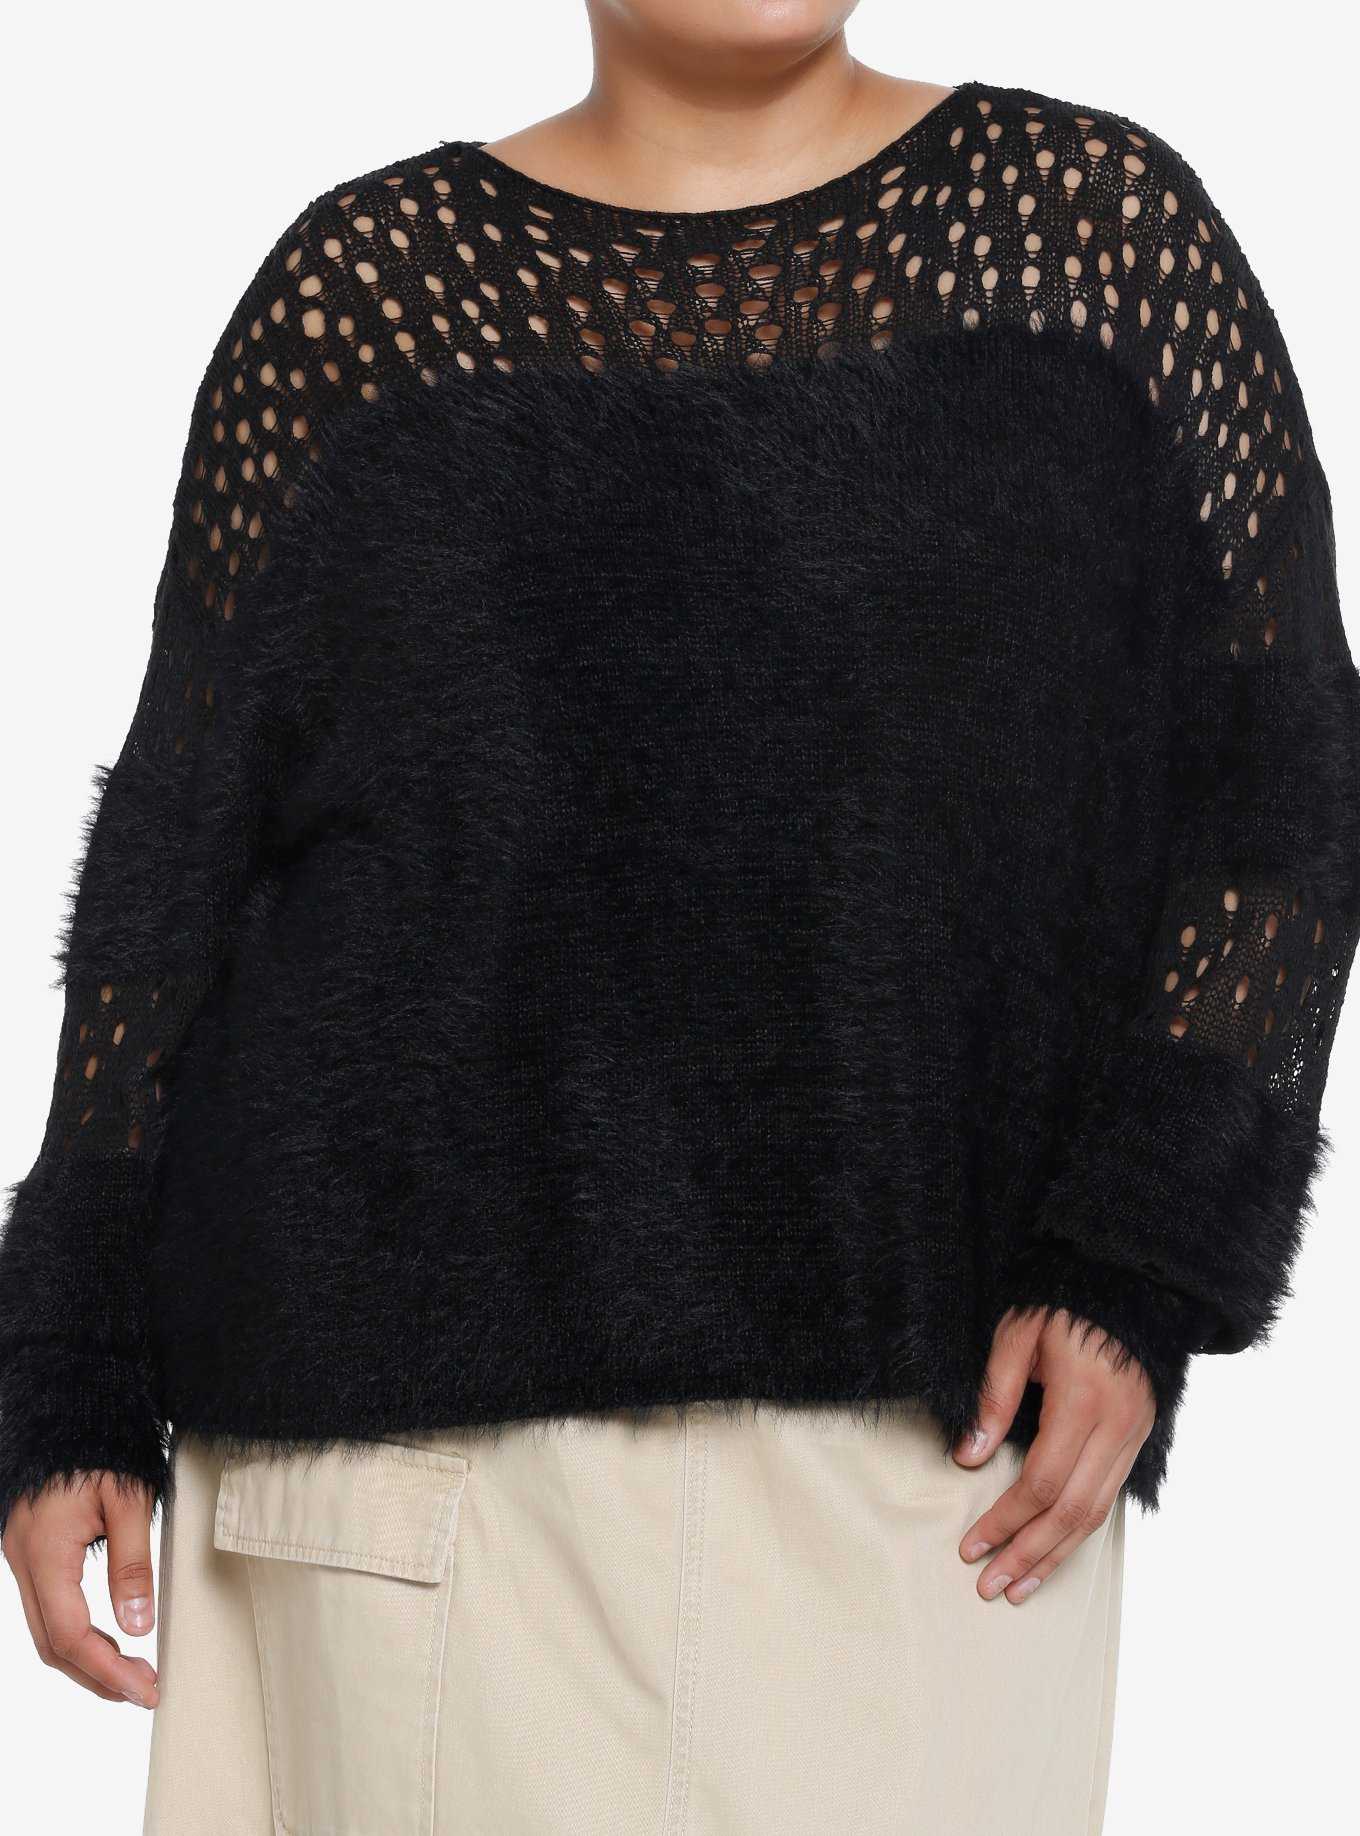 Social Collision Fuzzy Black Striped Fishnet Girls Knit Sweater Plus Size, , hi-res